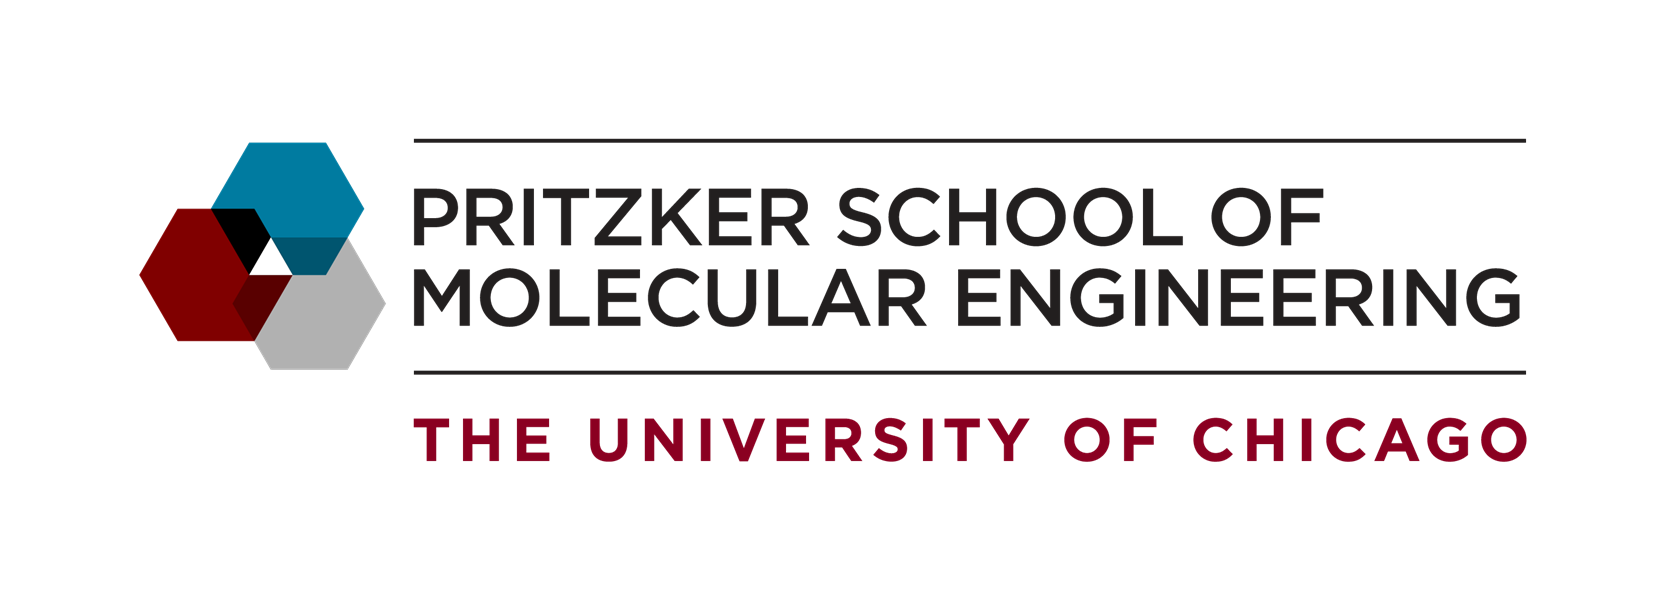 University Of Chicago Pritzker School Of Molecular Engineering Educational Consulting 